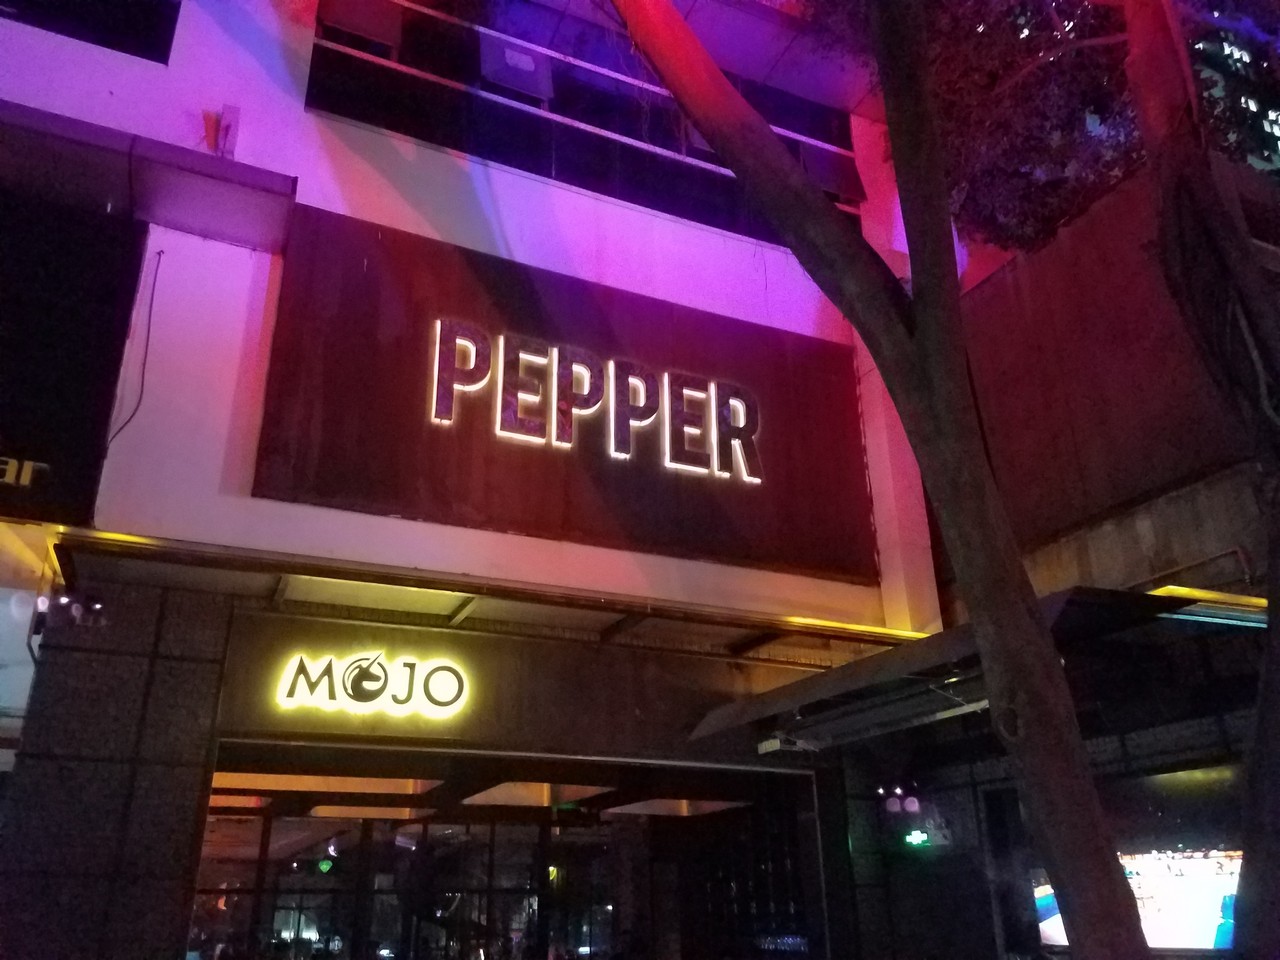 Another popular bar 